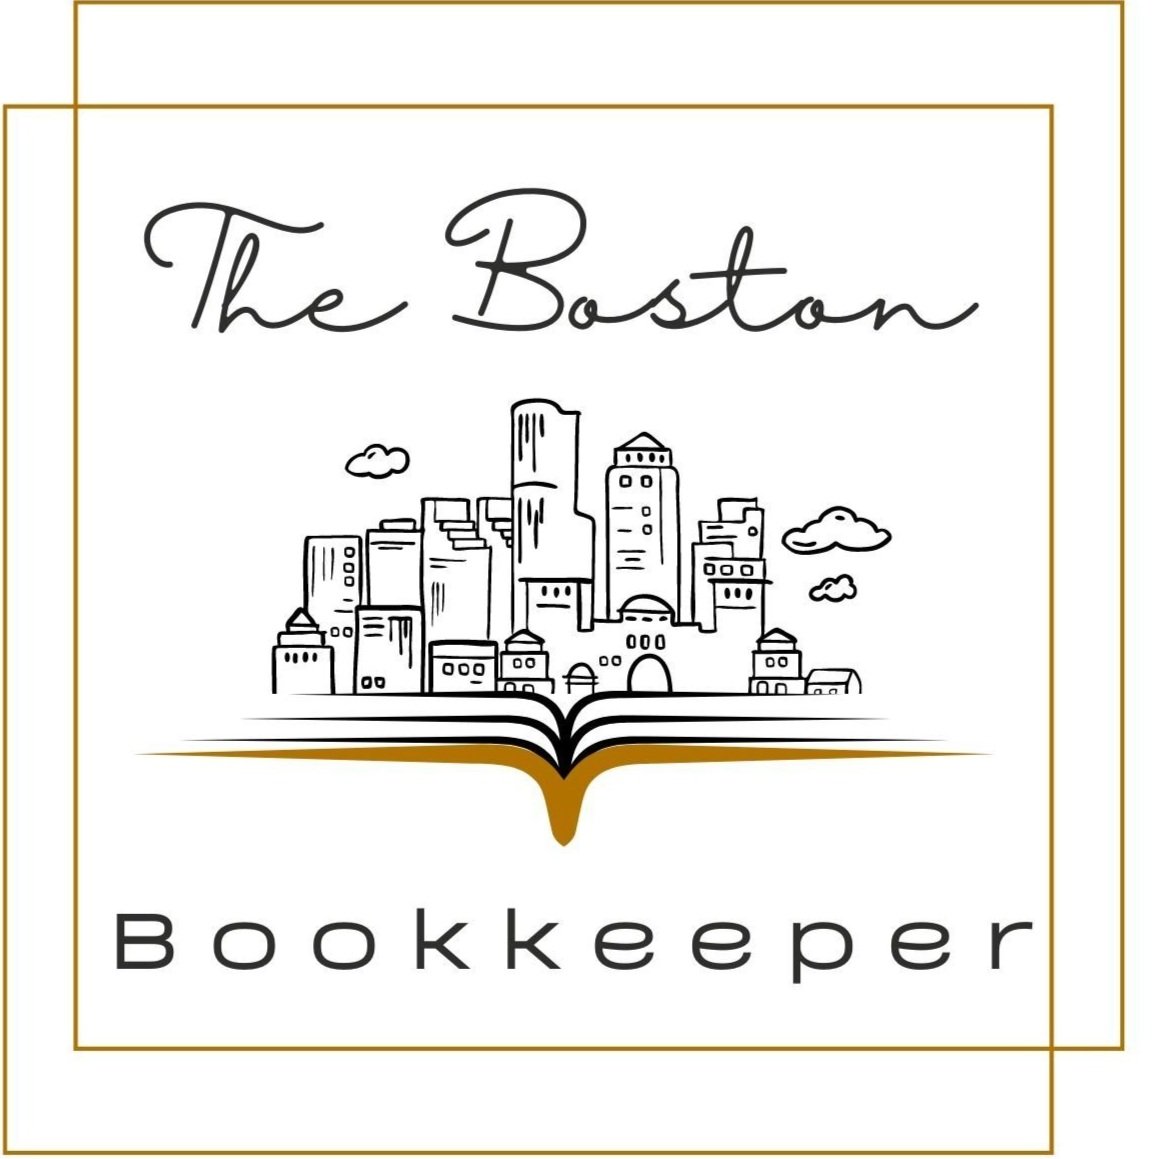 The Boston Bookkeeper